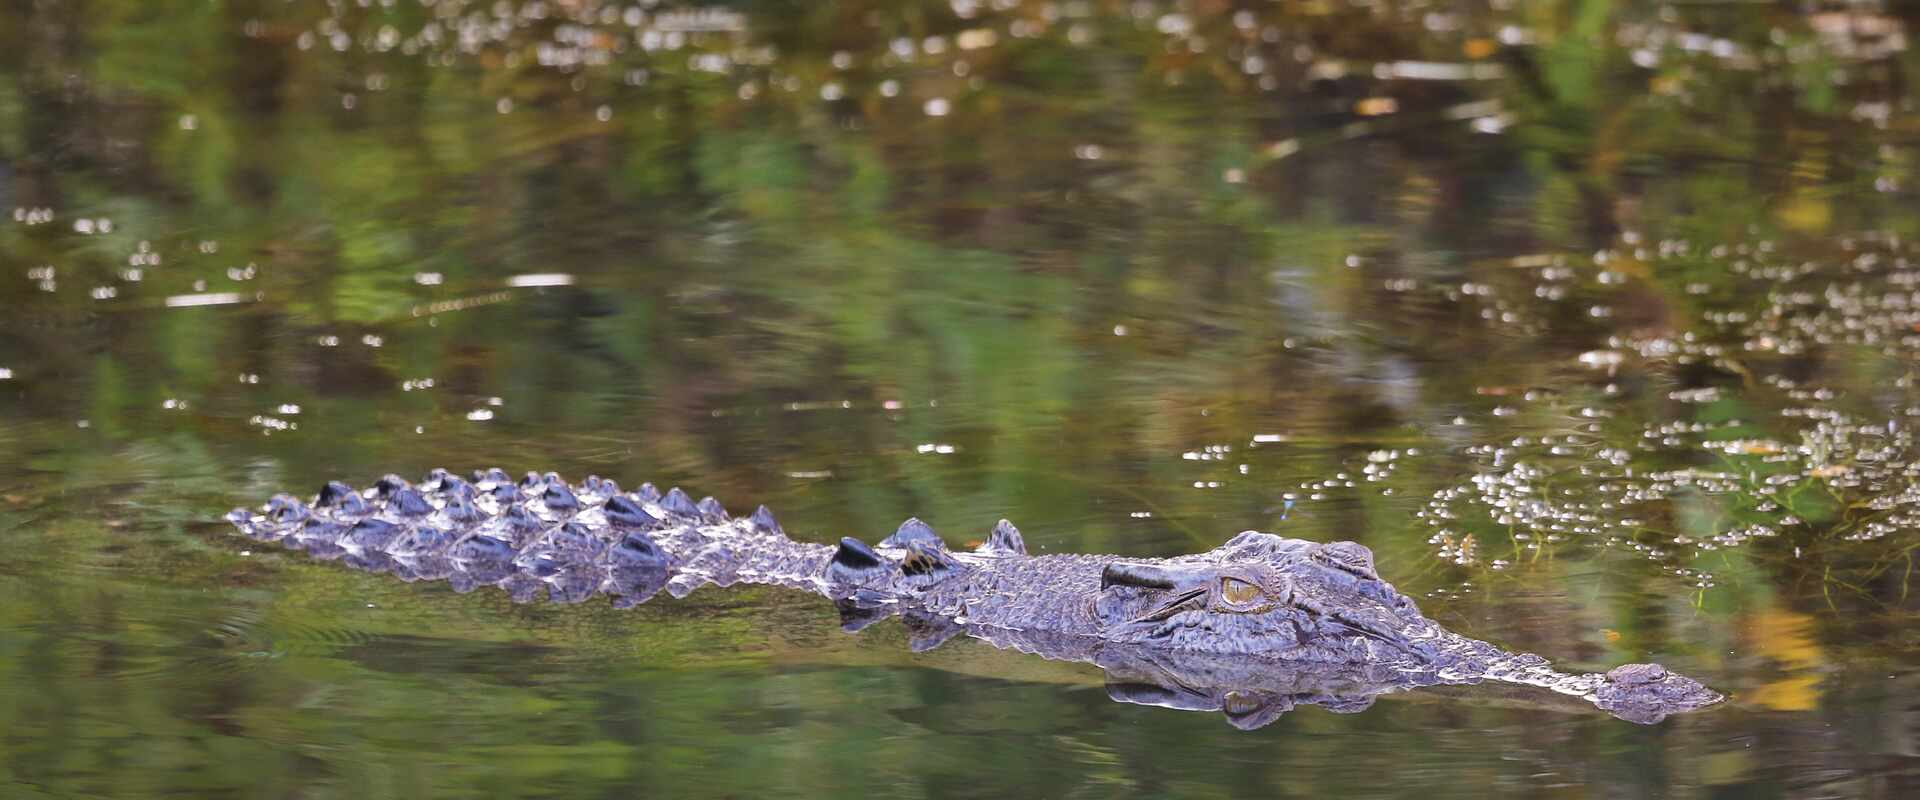 Saltwater Crocodile in water